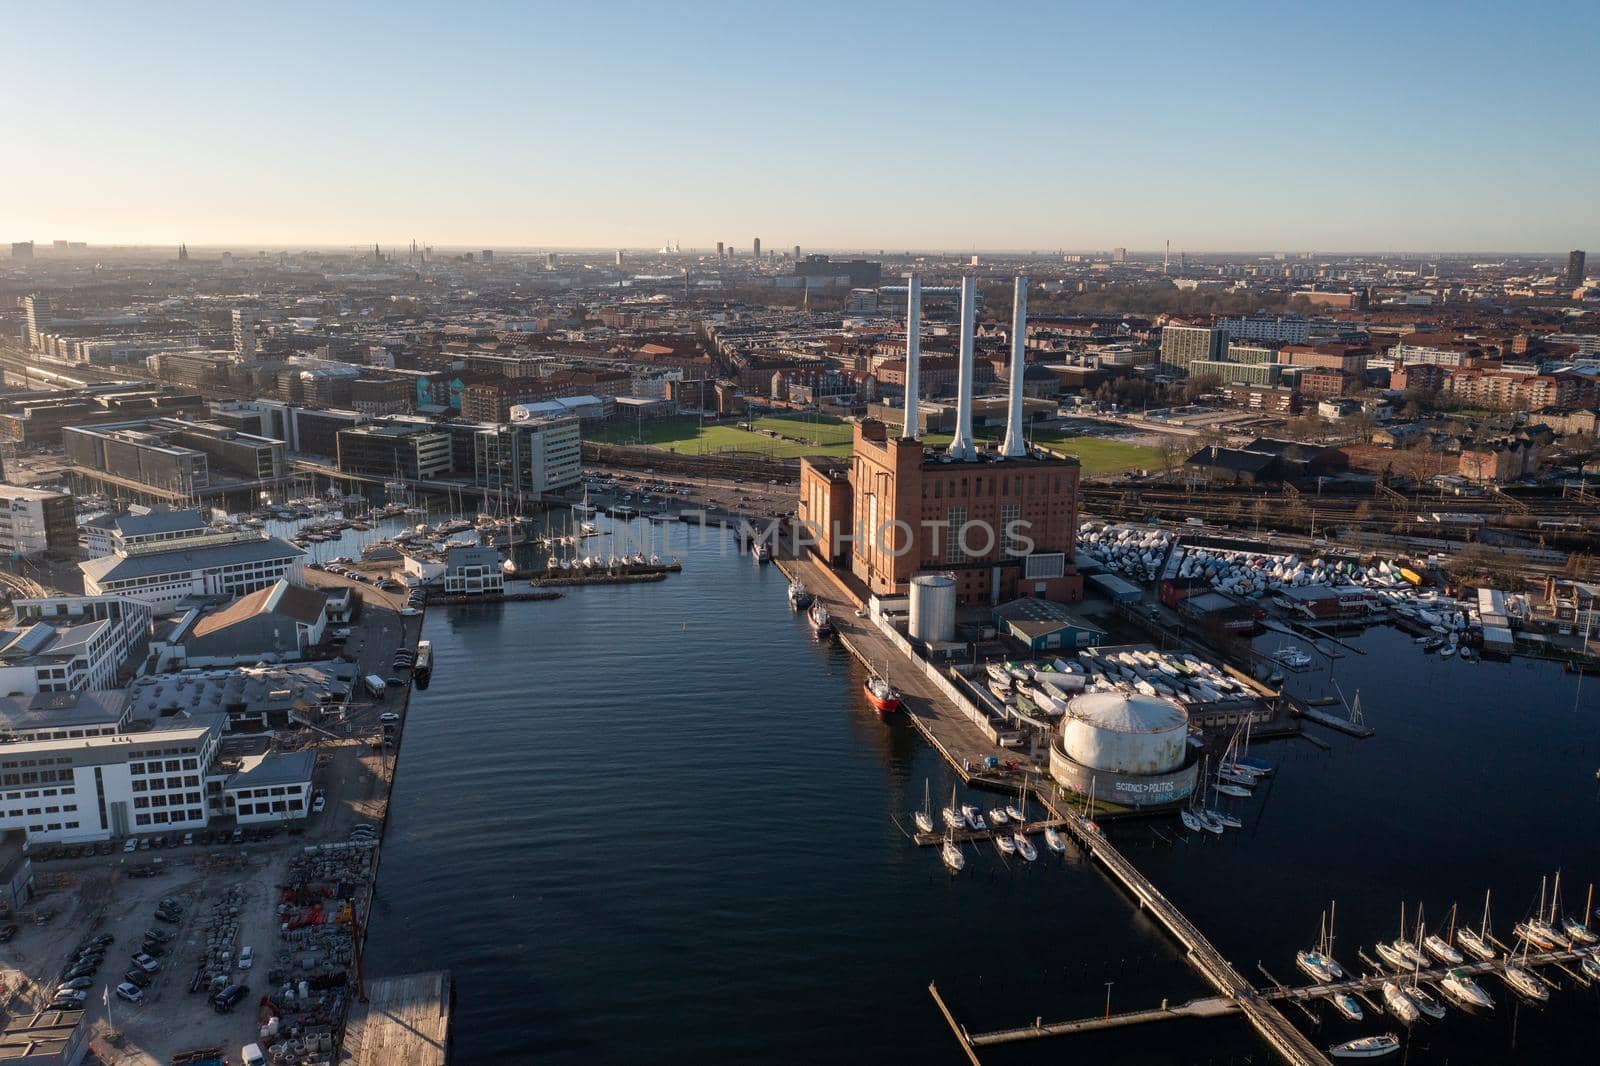 Drone View of Svanemolle Power Station in Copenhagen by oliverfoerstner